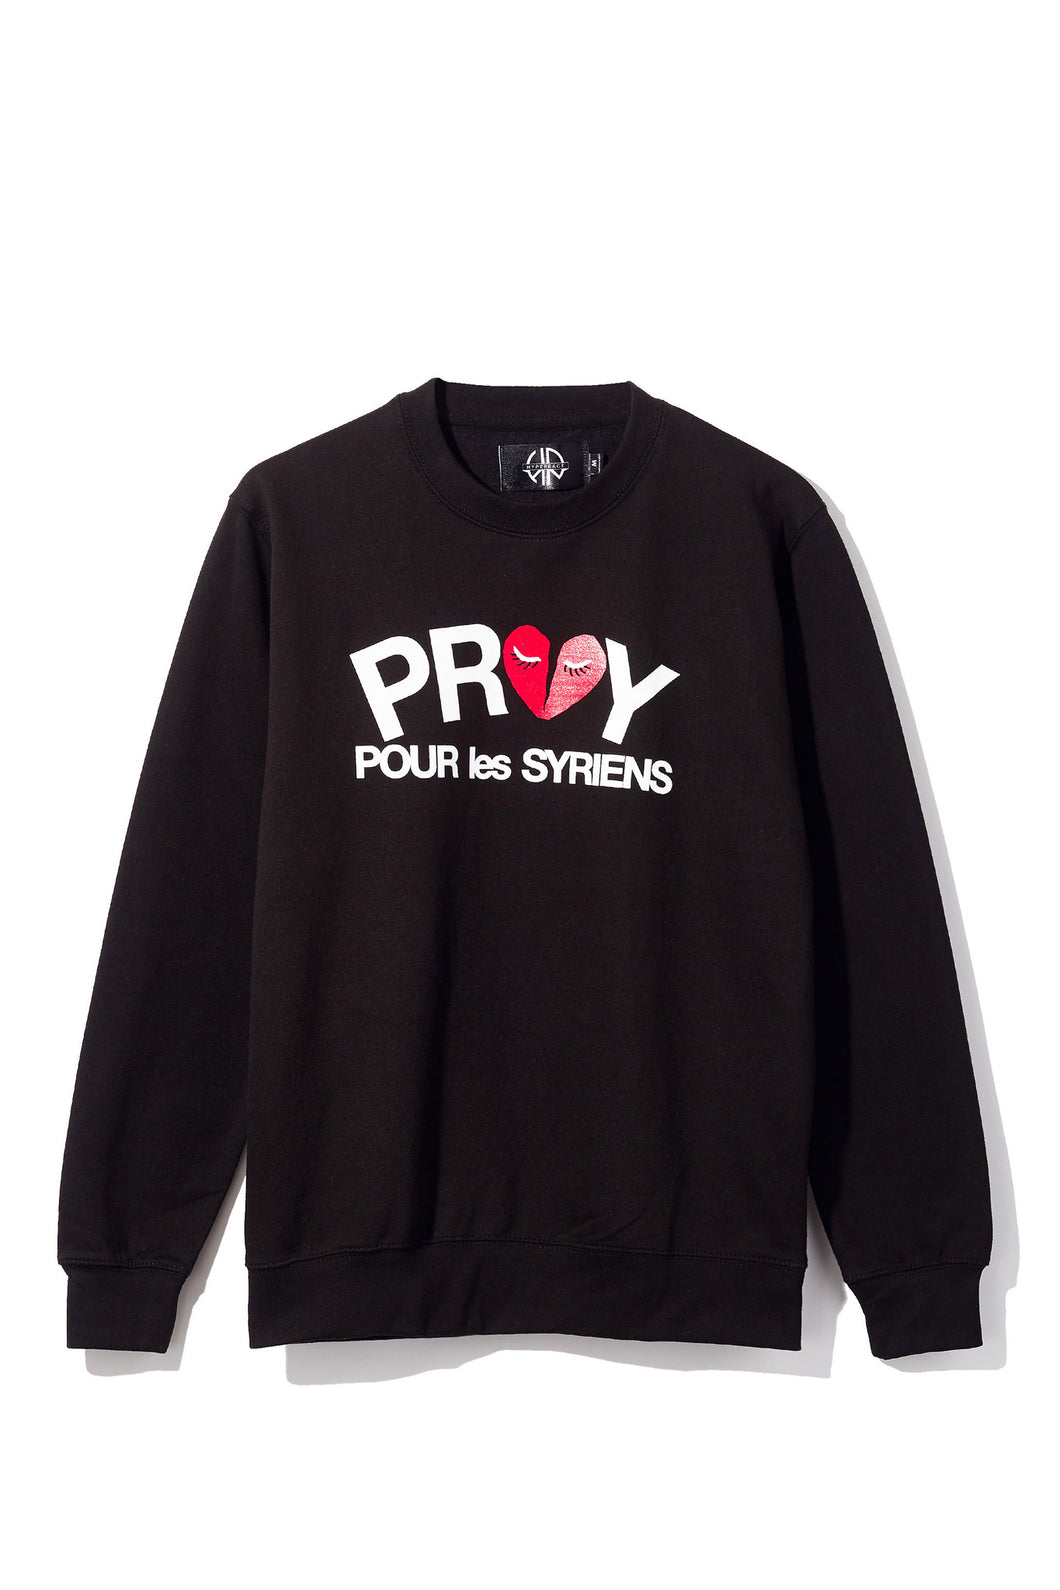 PRAY Sweater